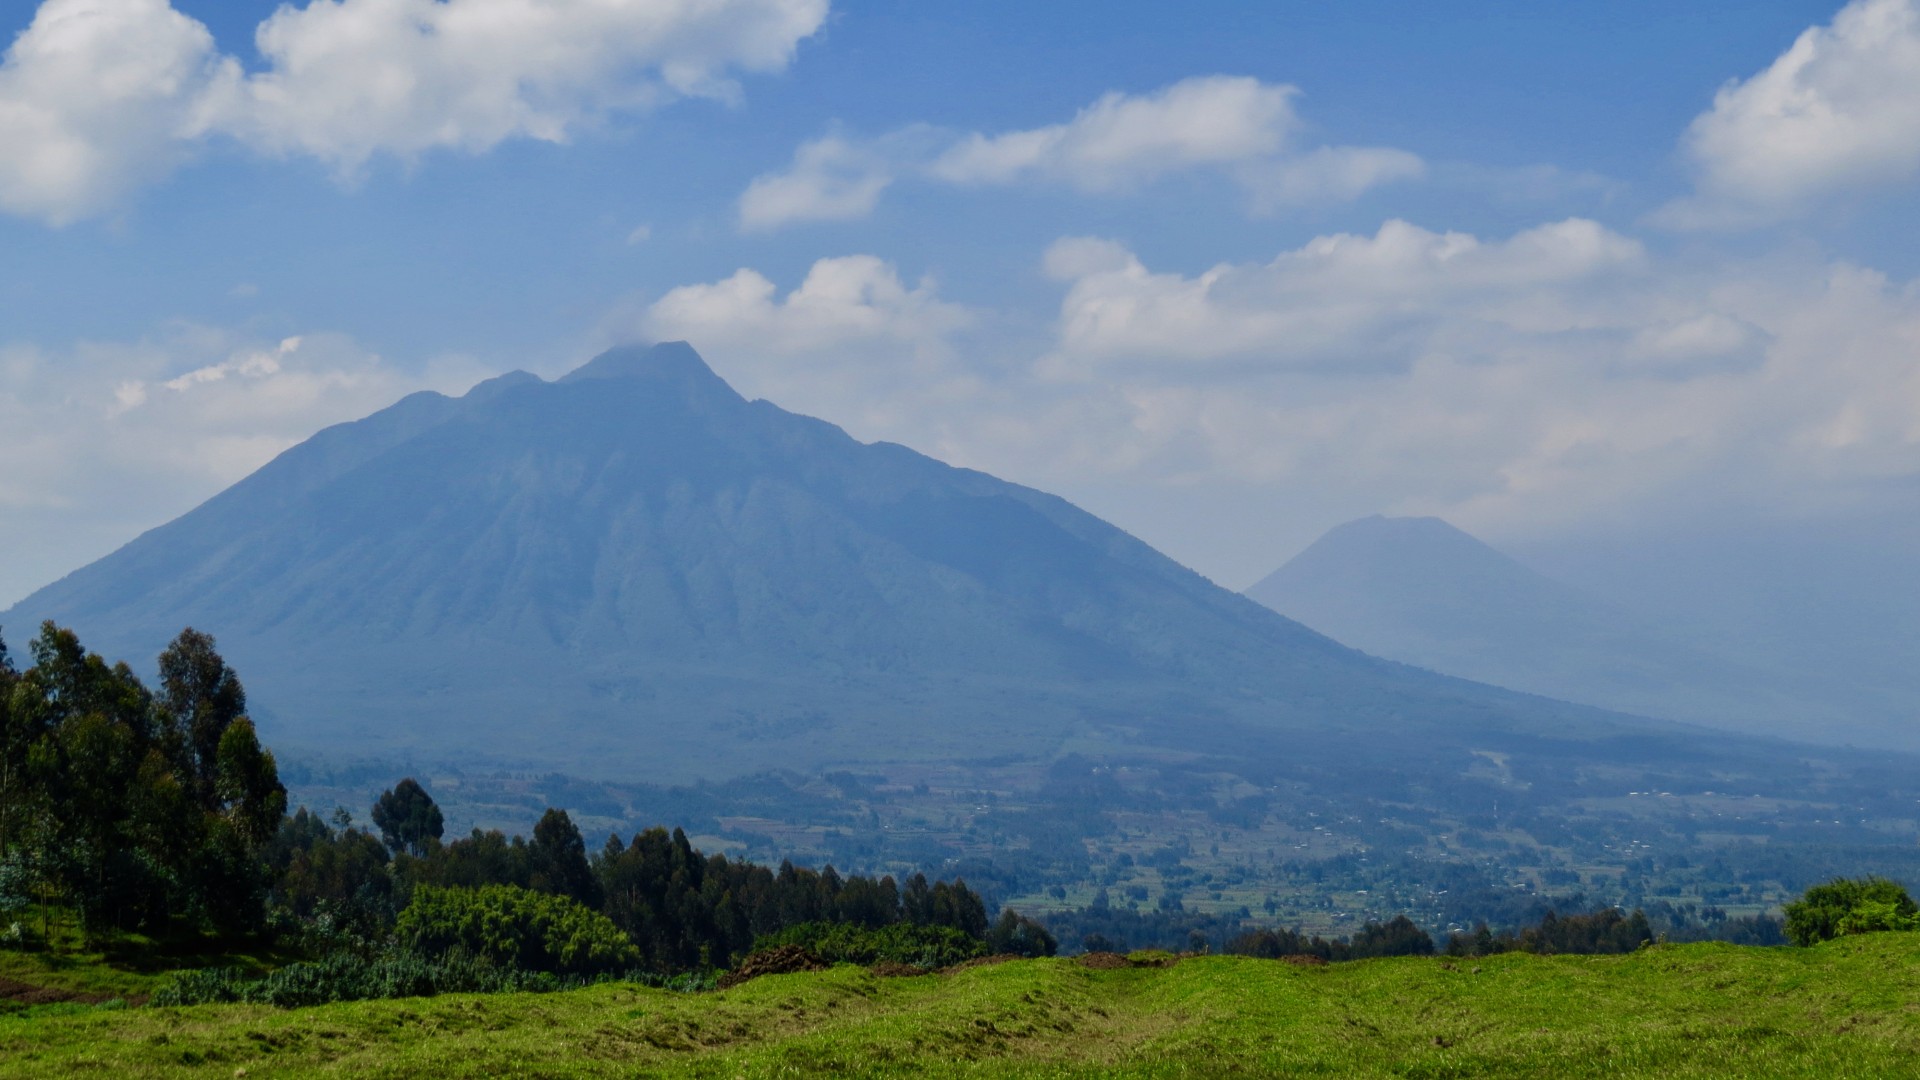 Mountain views in Rwanda, Africa